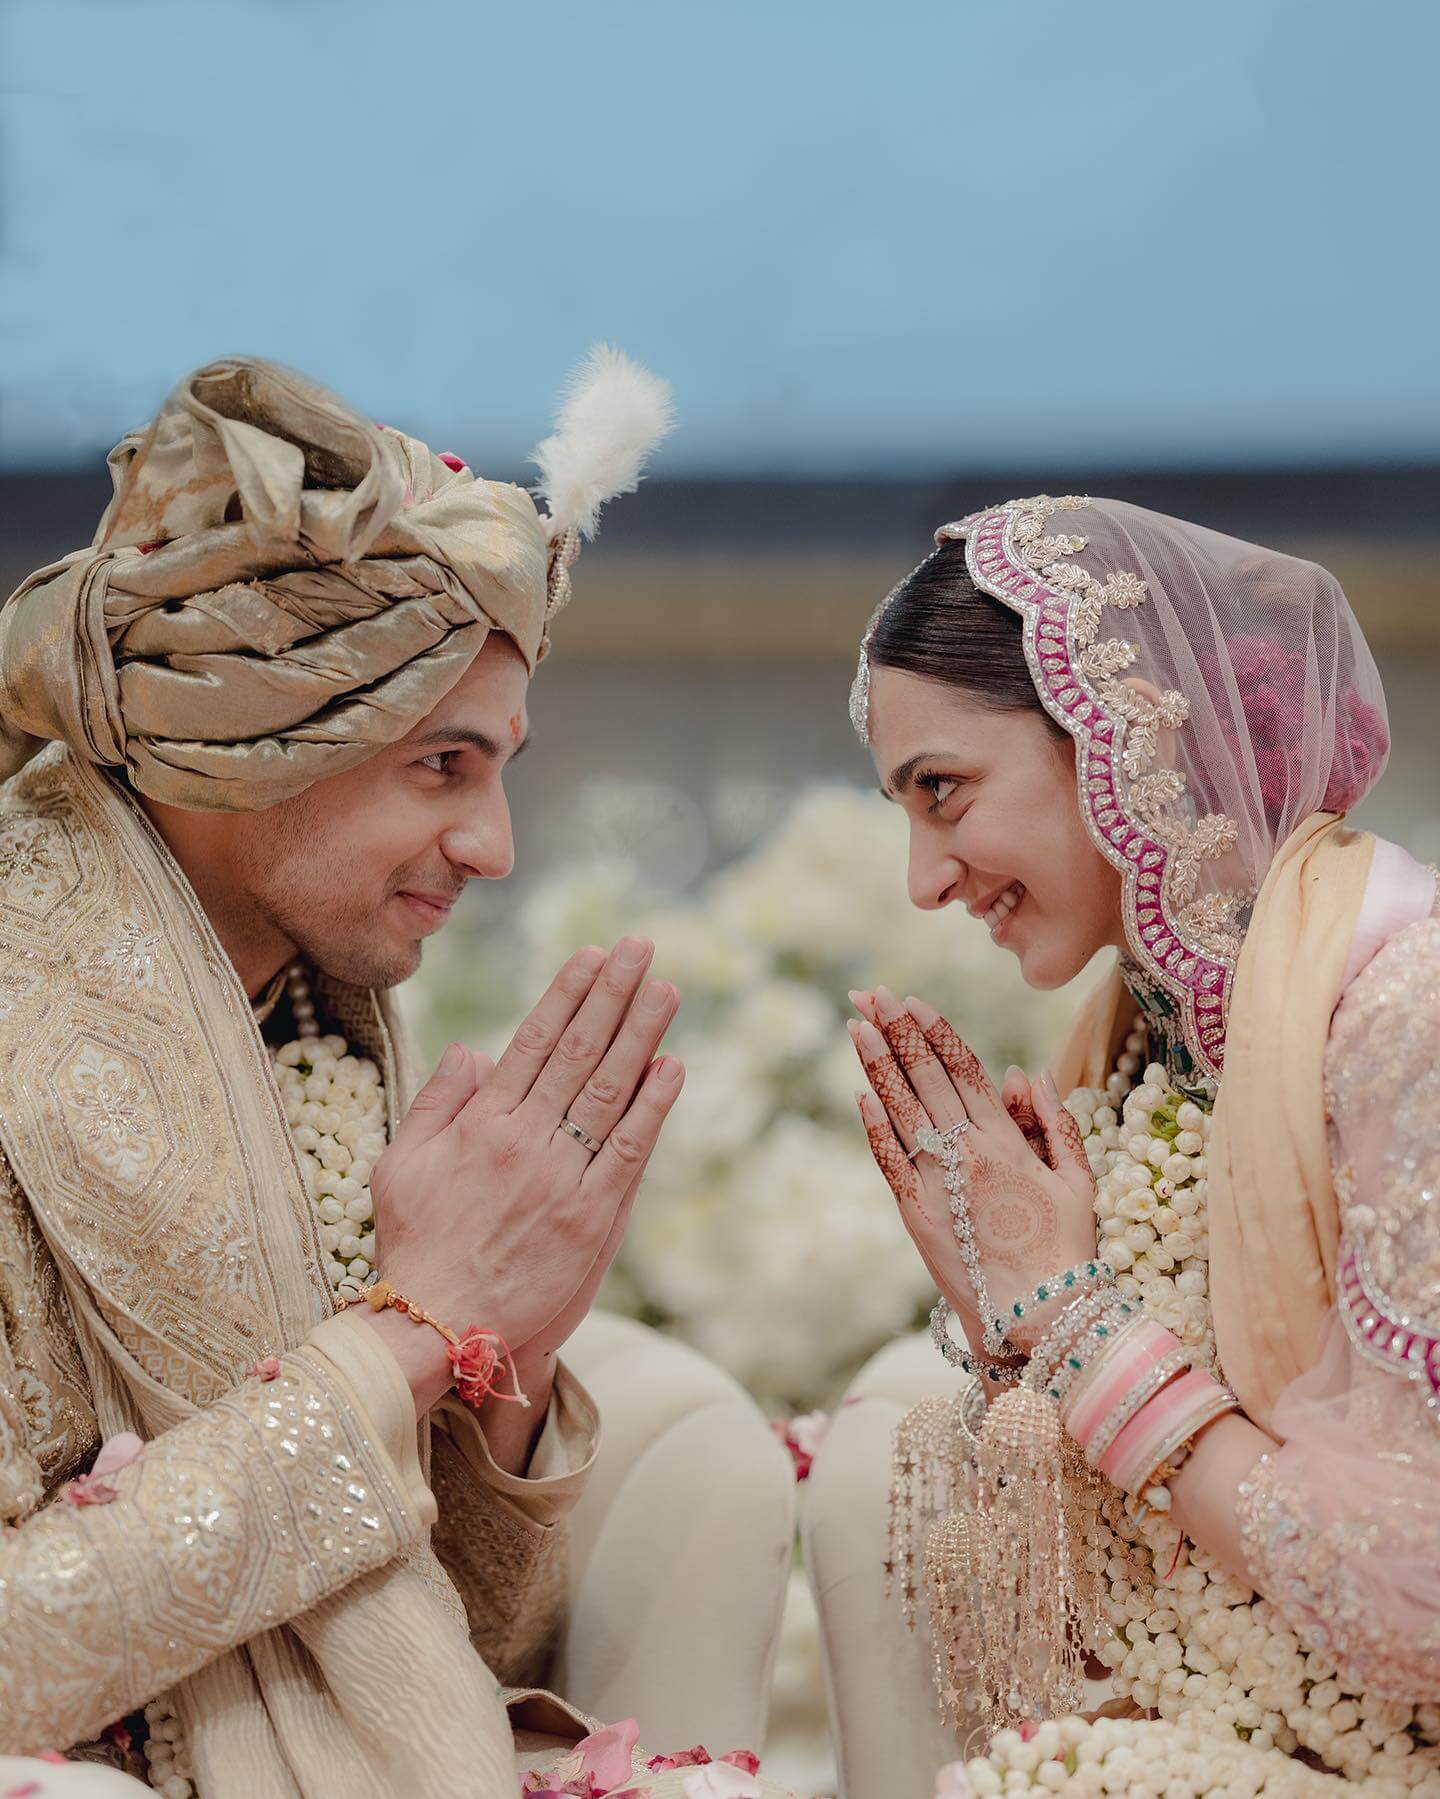 Manish Malhotra shares details of Kiara Advani’s bridal lehenga and jewellery